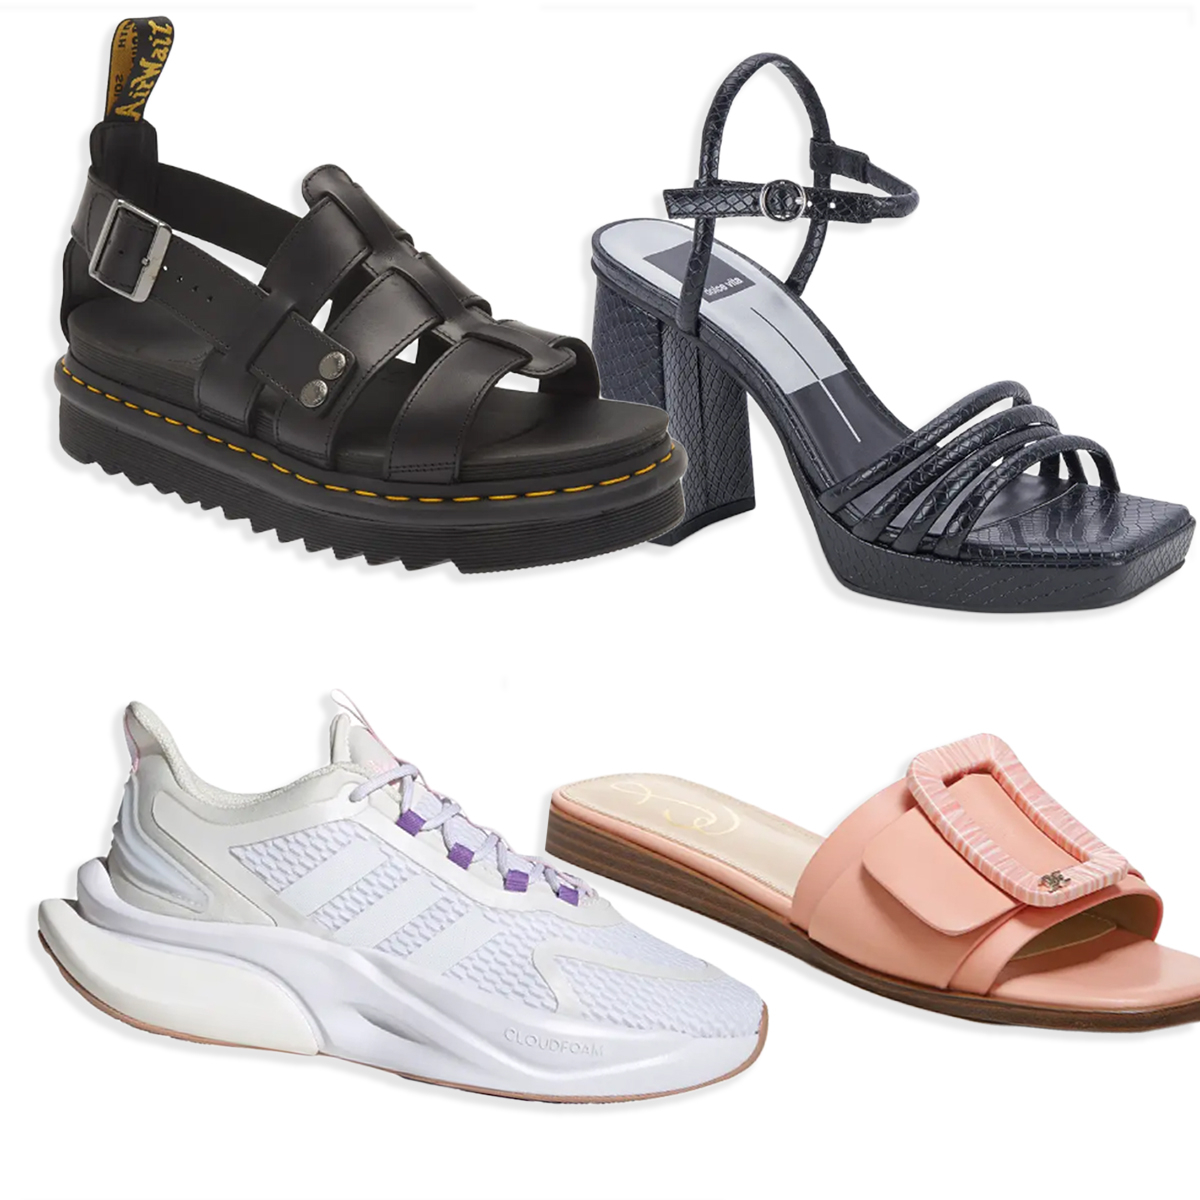 Nordstrom Rack shoe sale: Up to 75% off sneakers, heels, sandals, more 